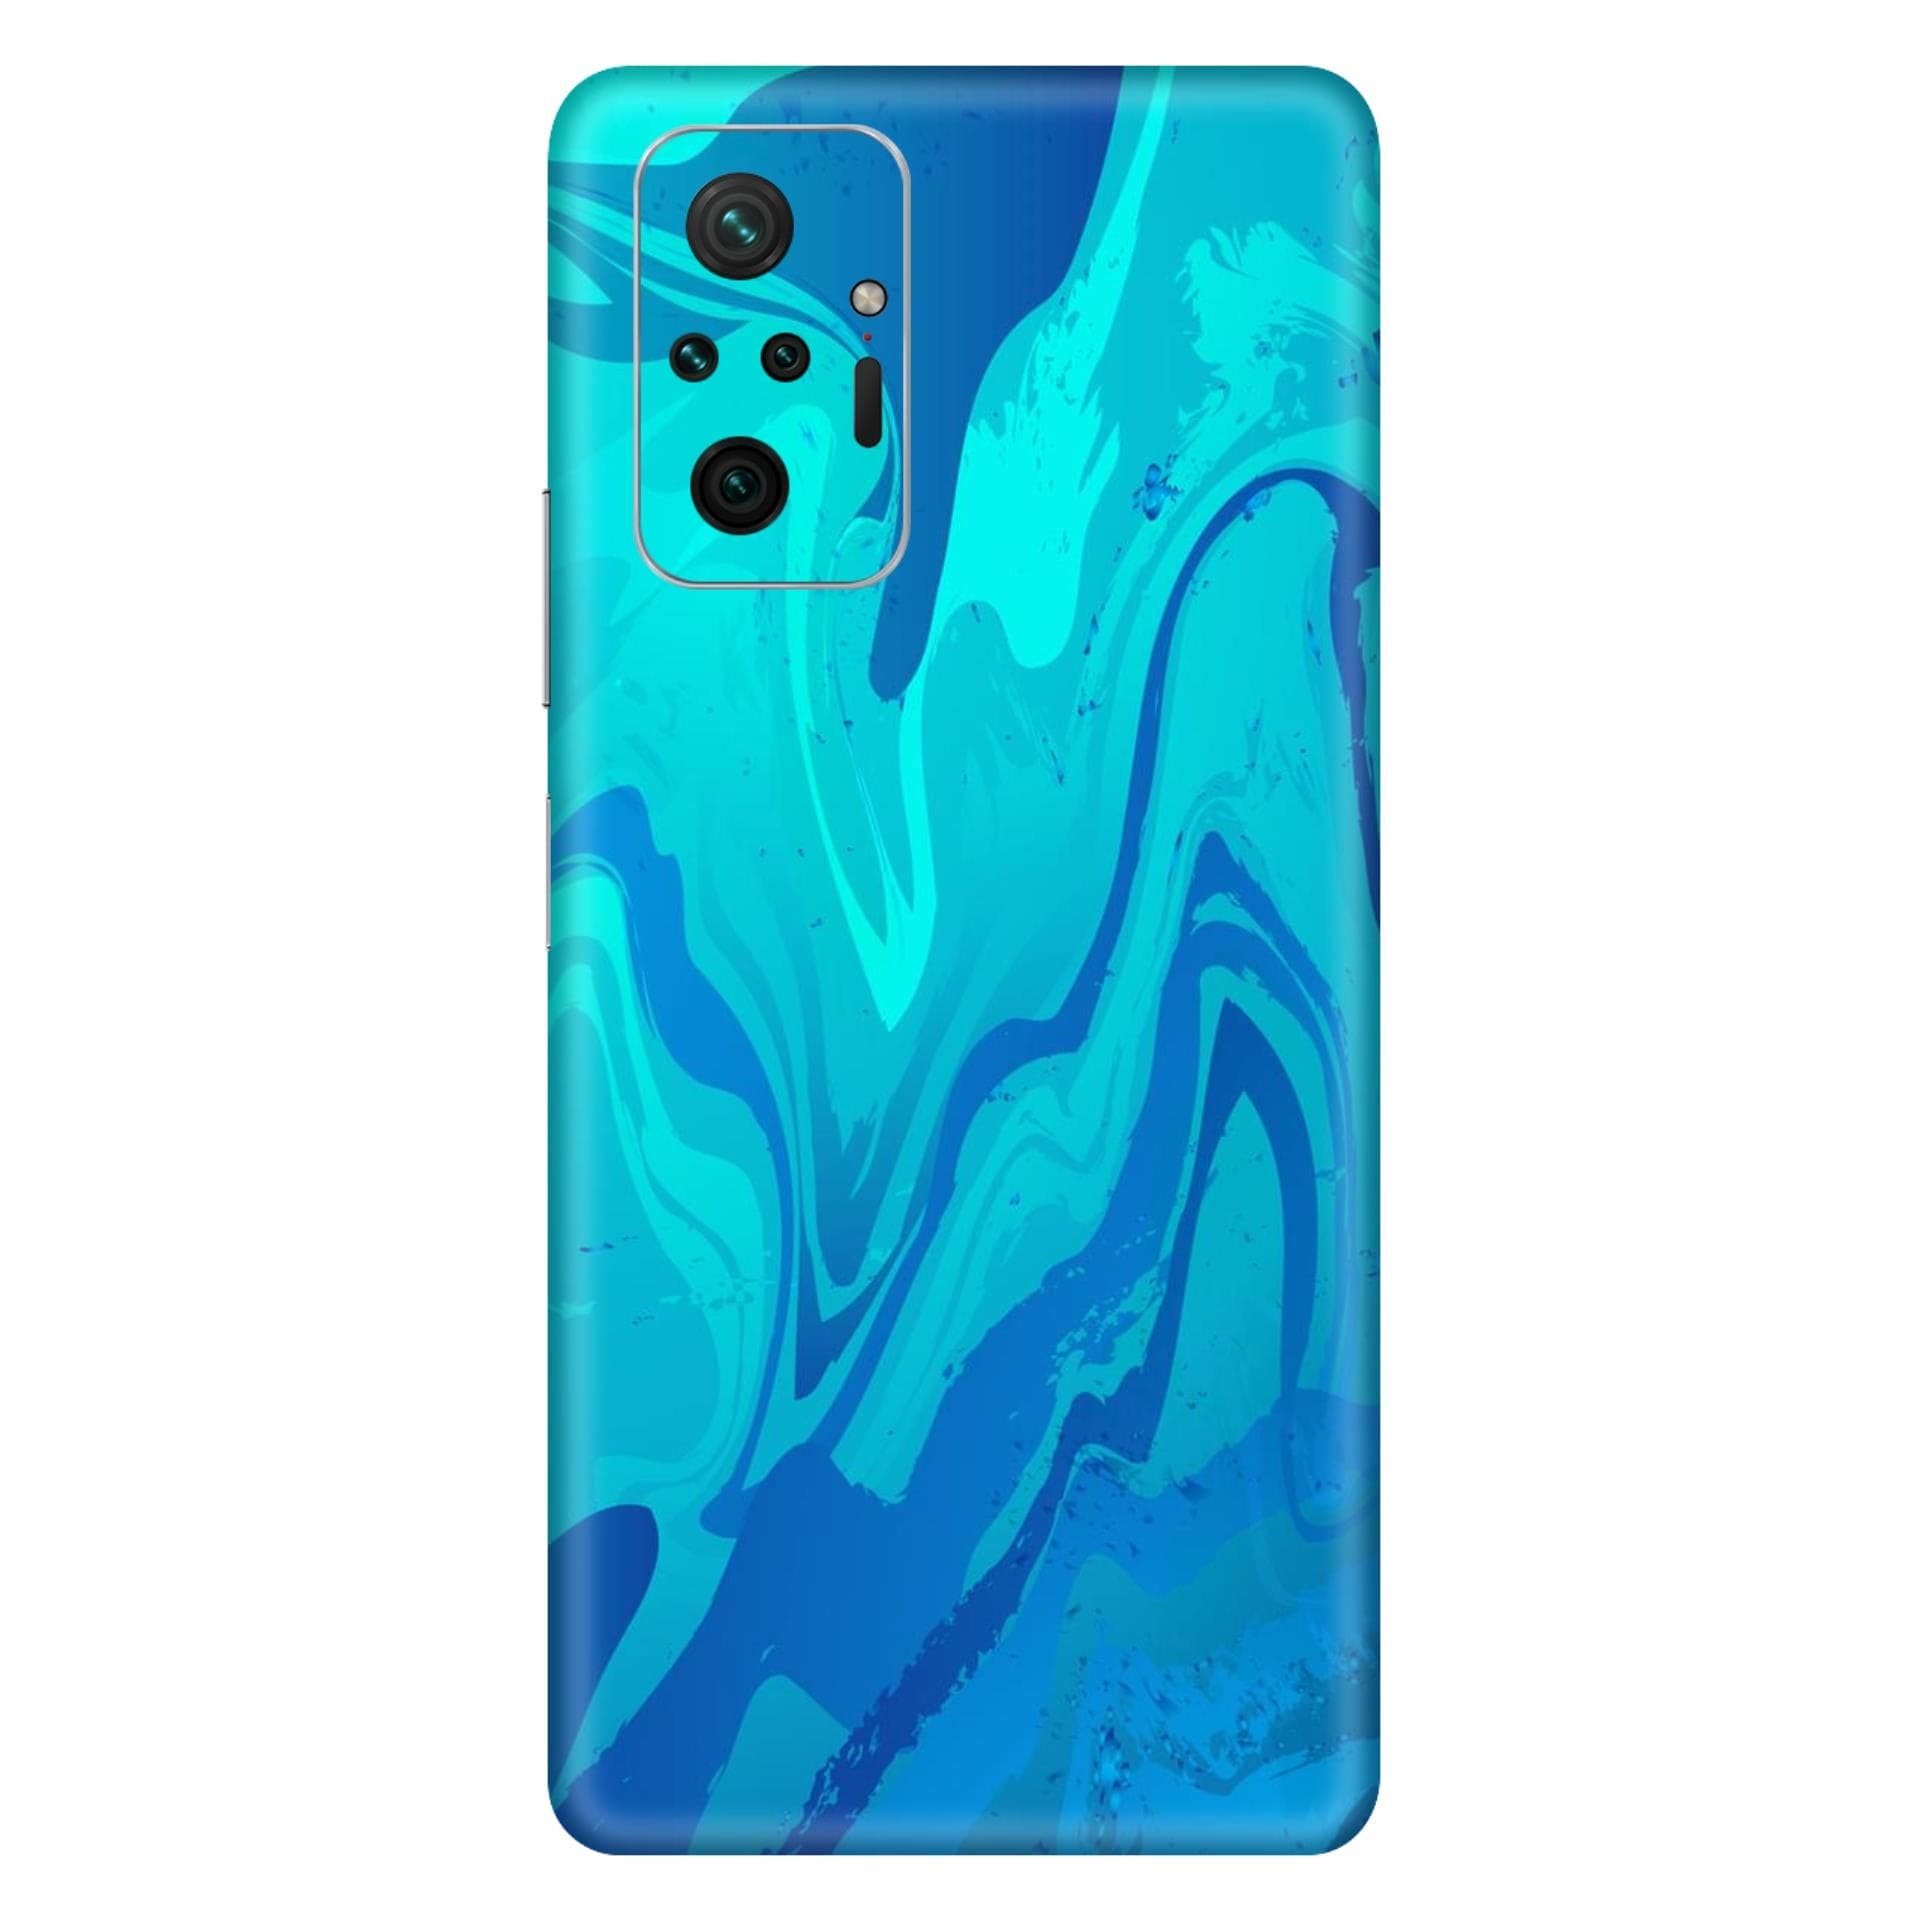 Redmi Note 10 Pro Max Posiden Blue skins